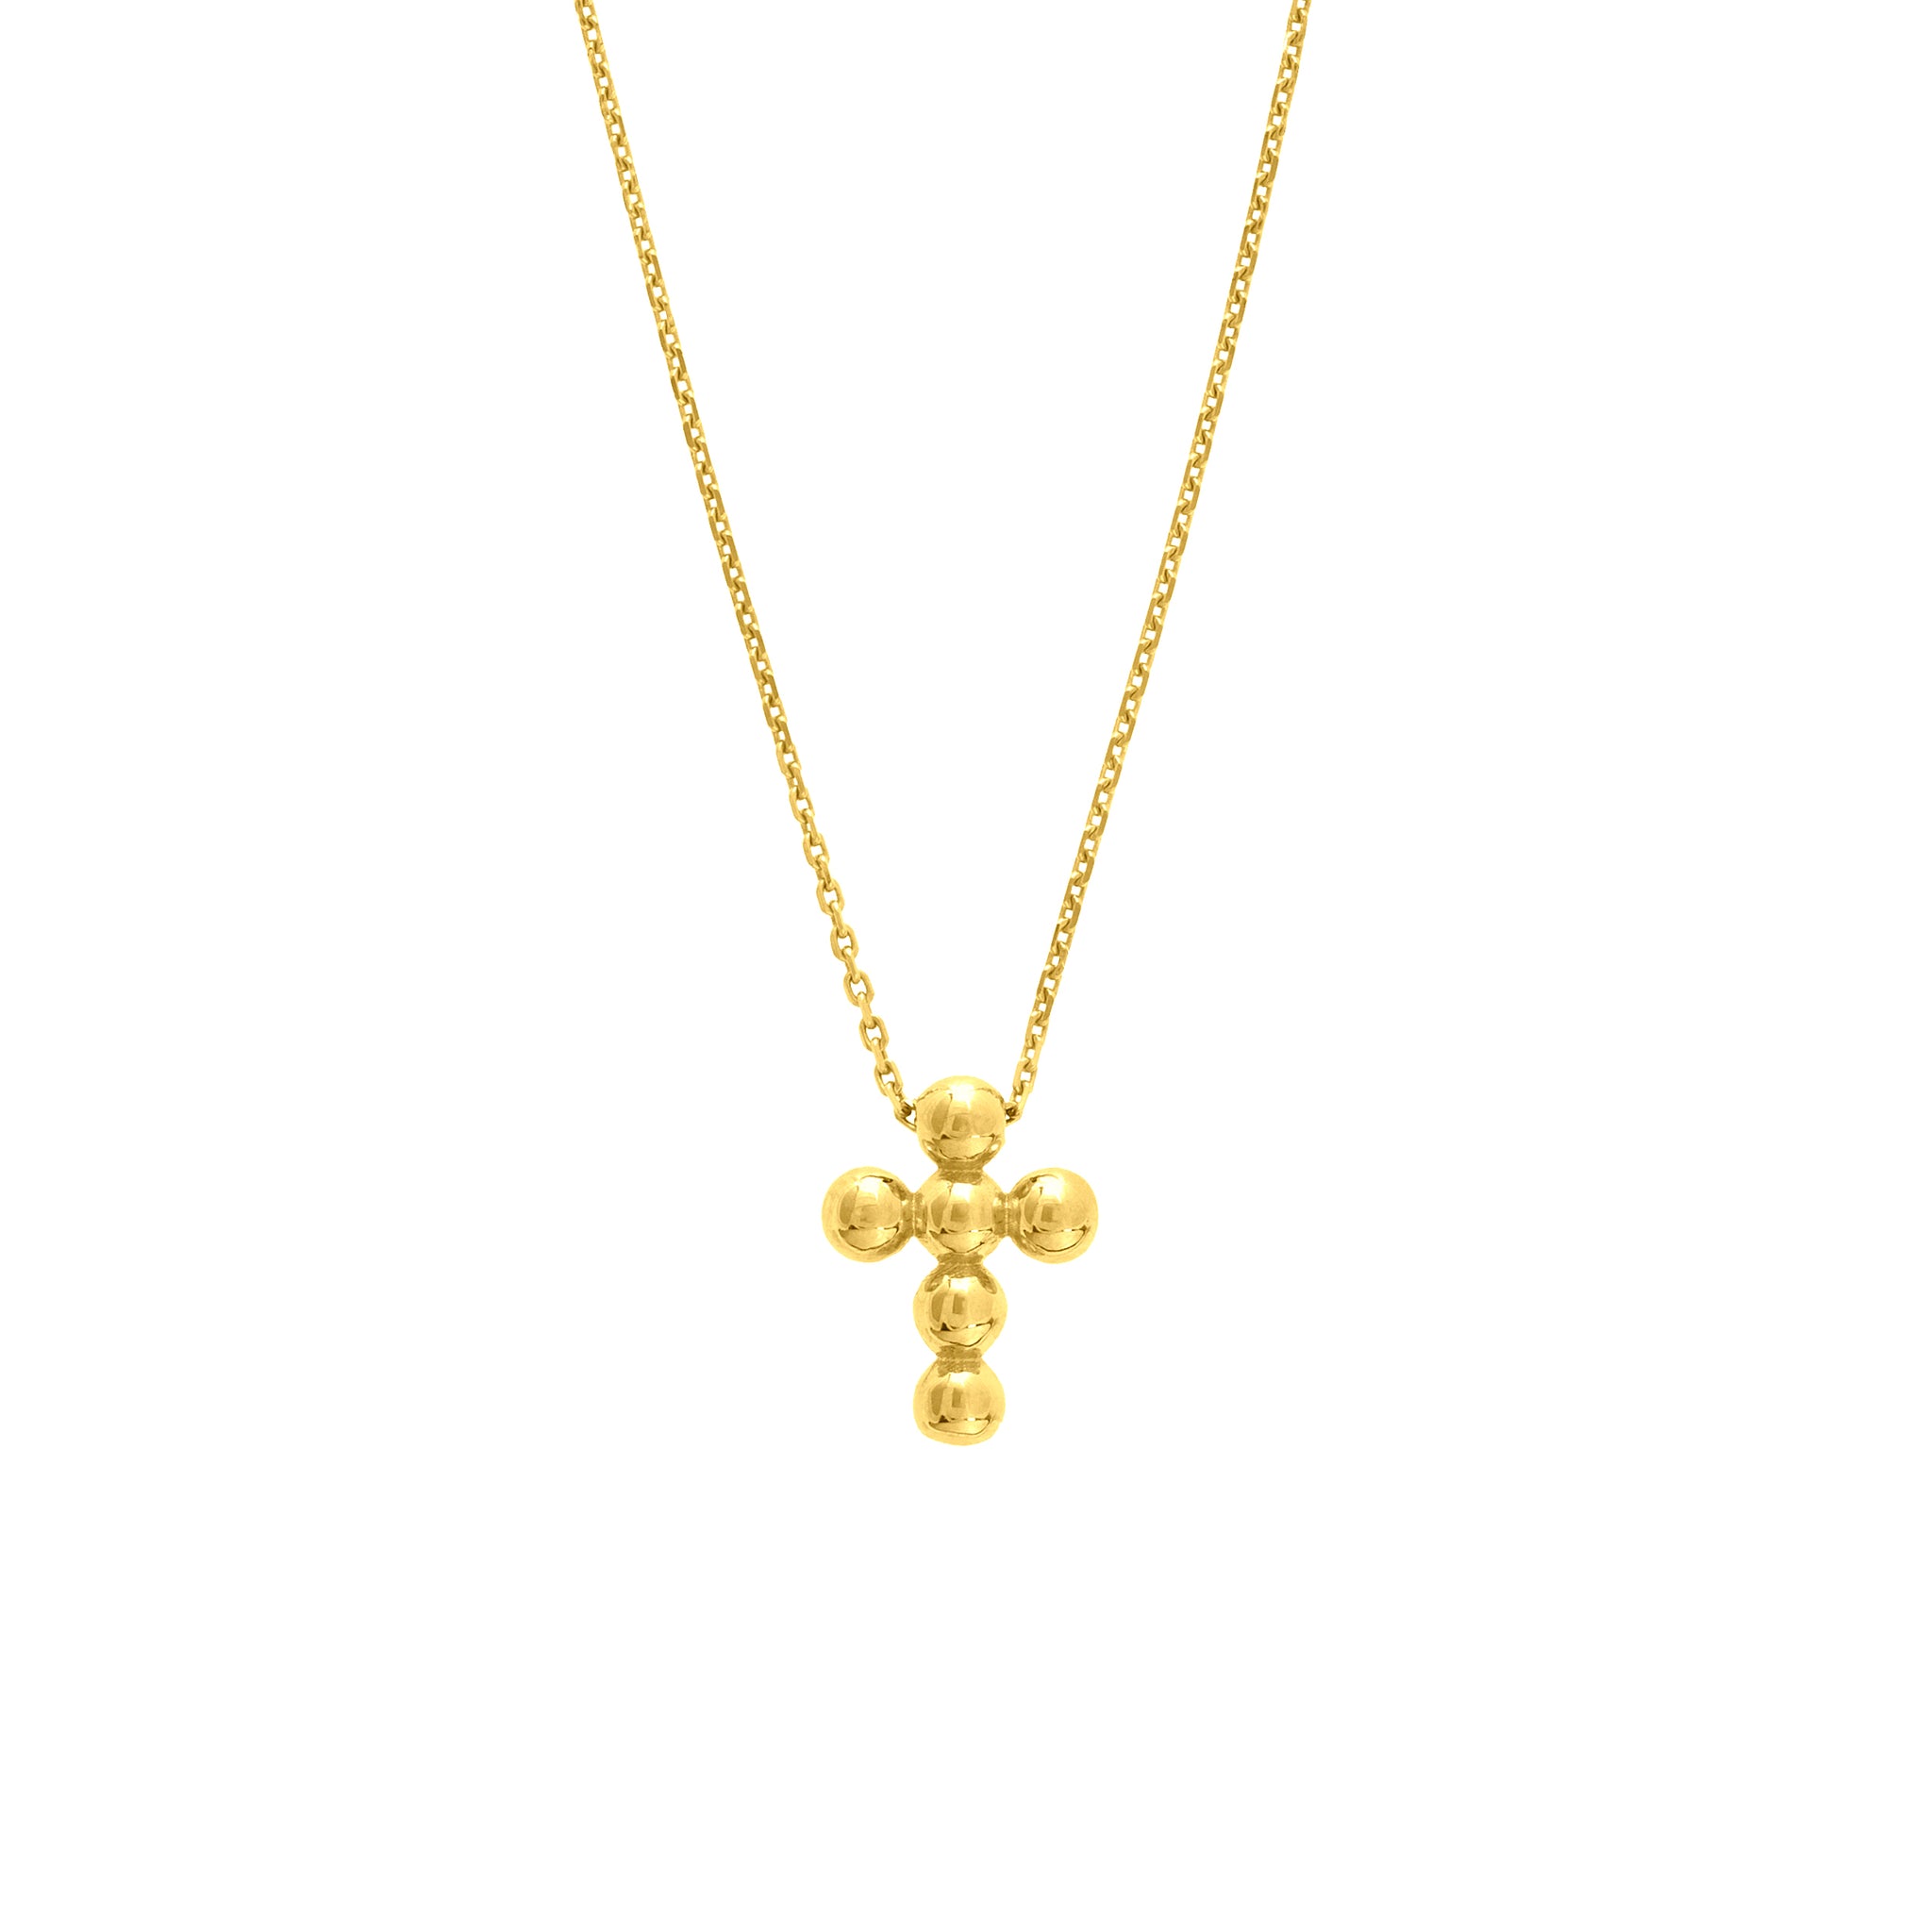 Pendentif de la collection Hemsleys 14K mini croix religieuse en perles